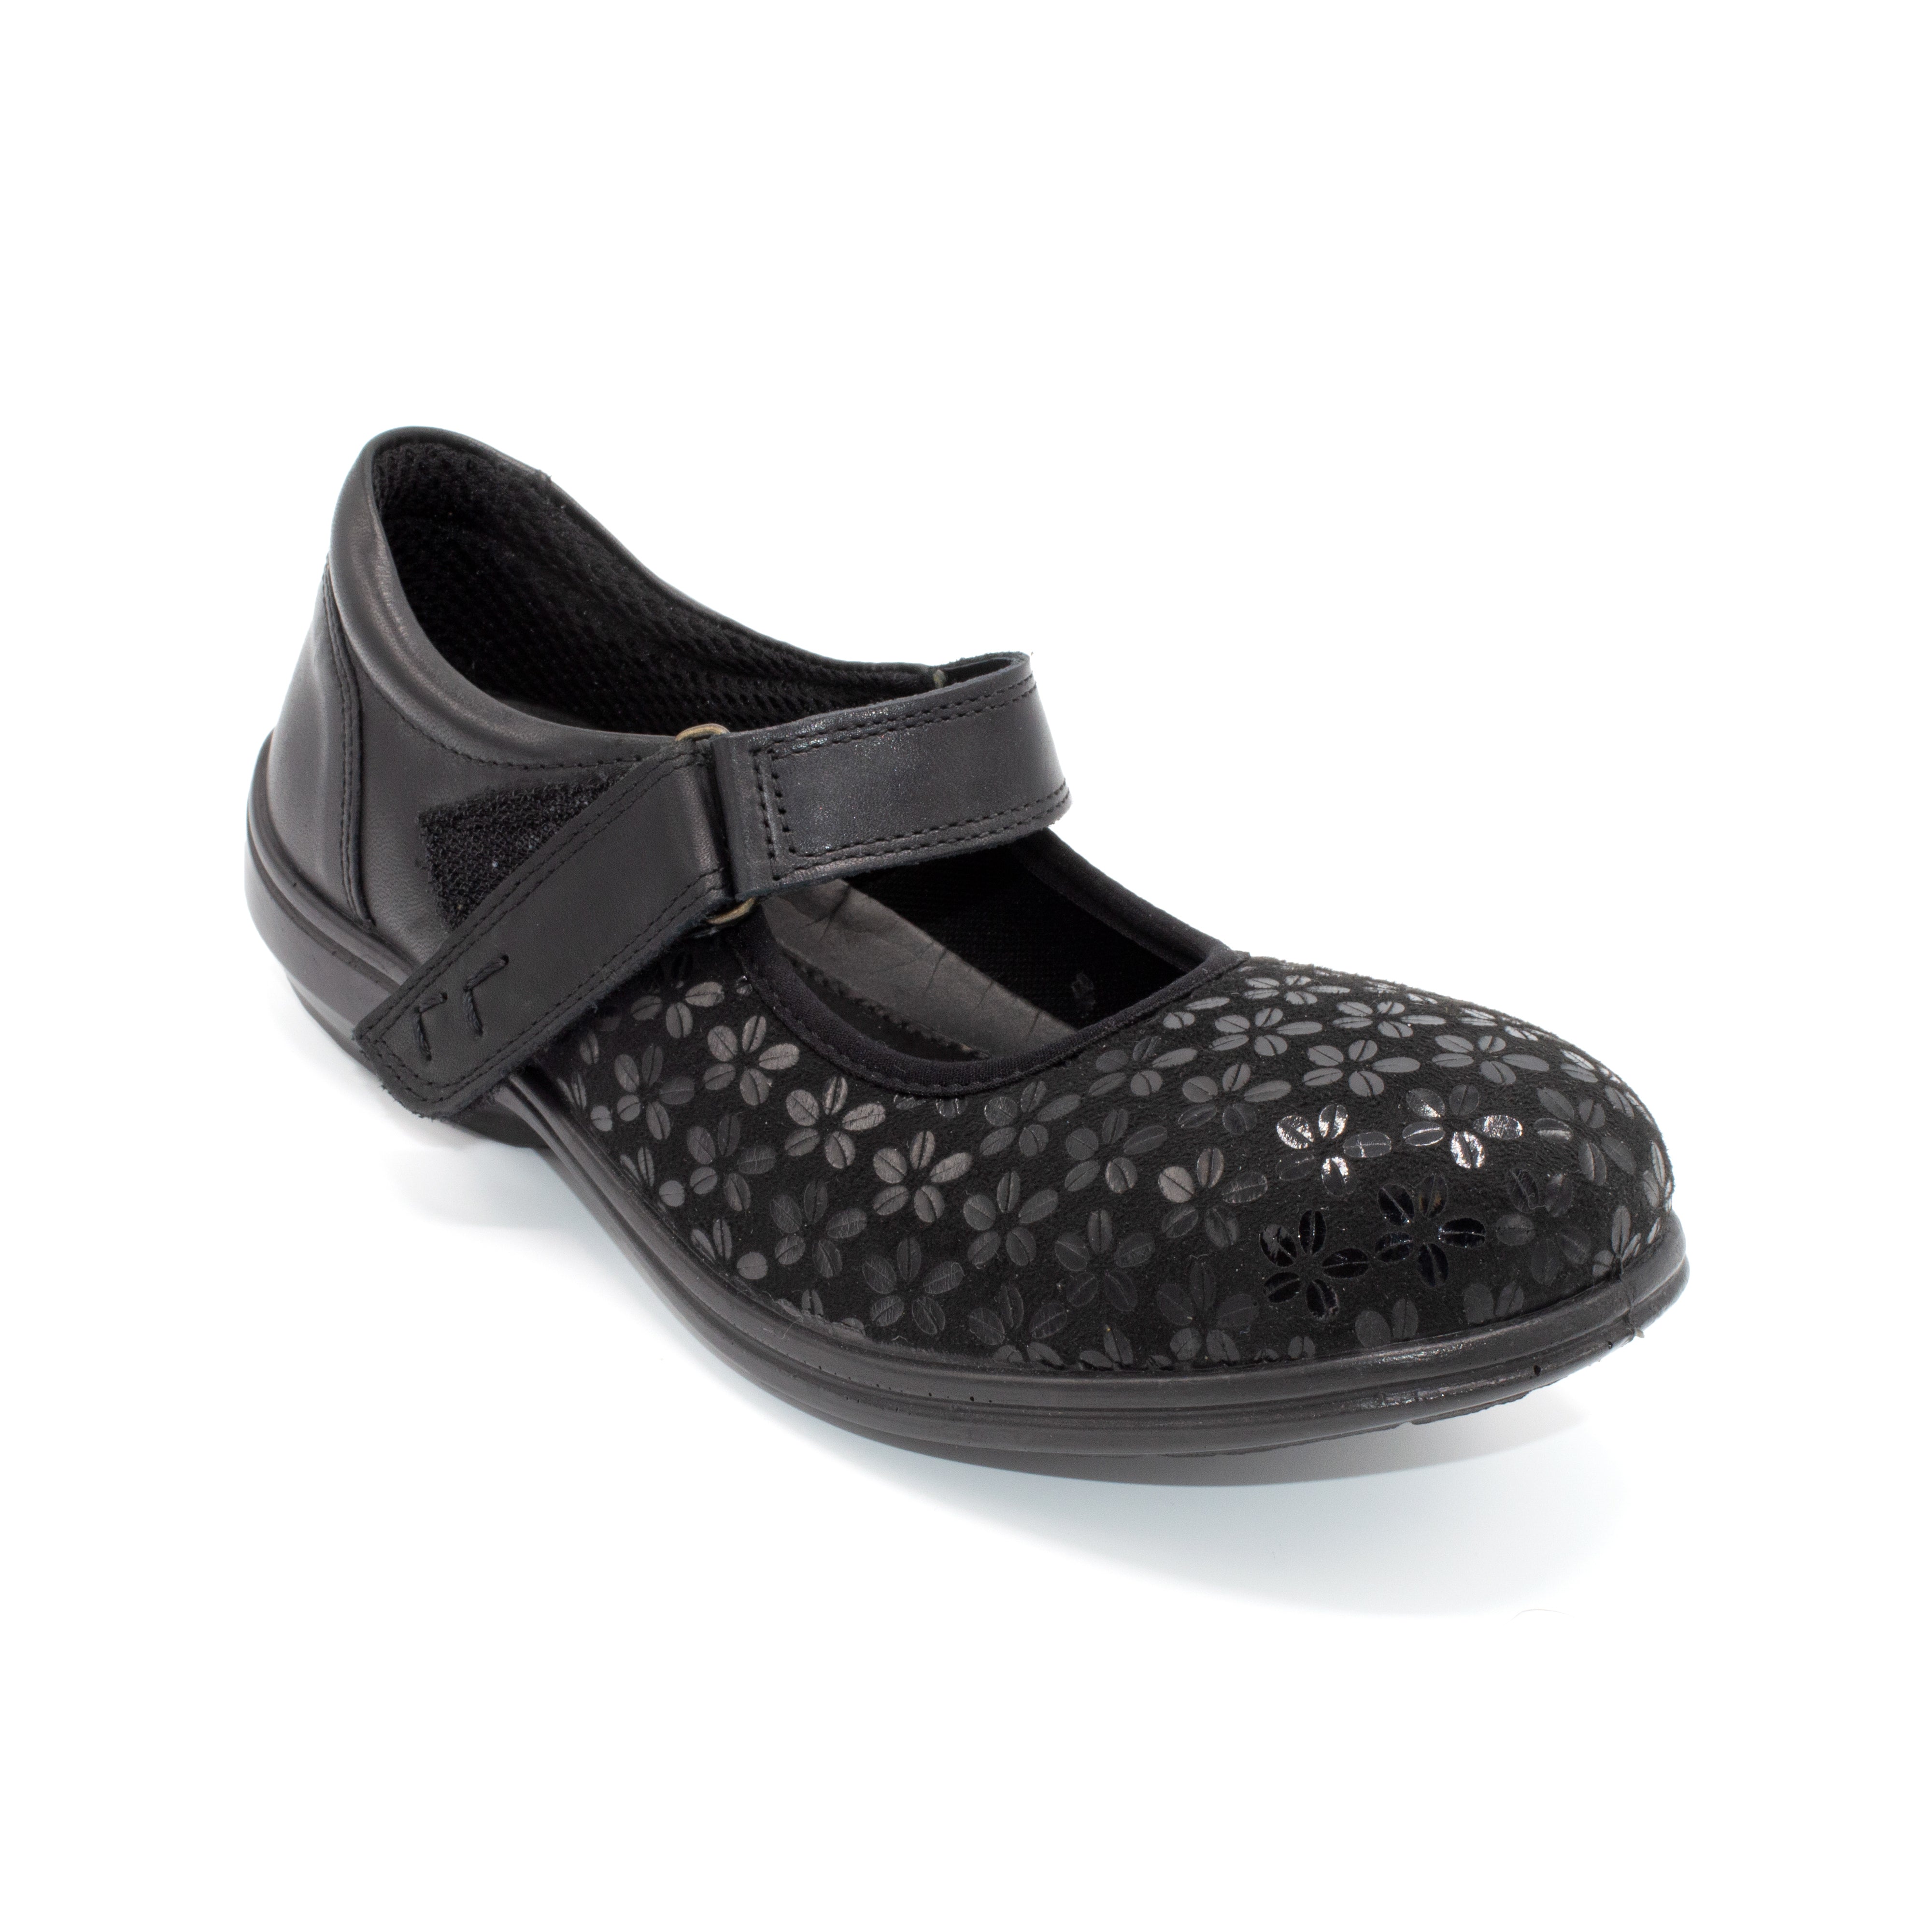 Black Ladies Velcro Shoe For Swollen Feet